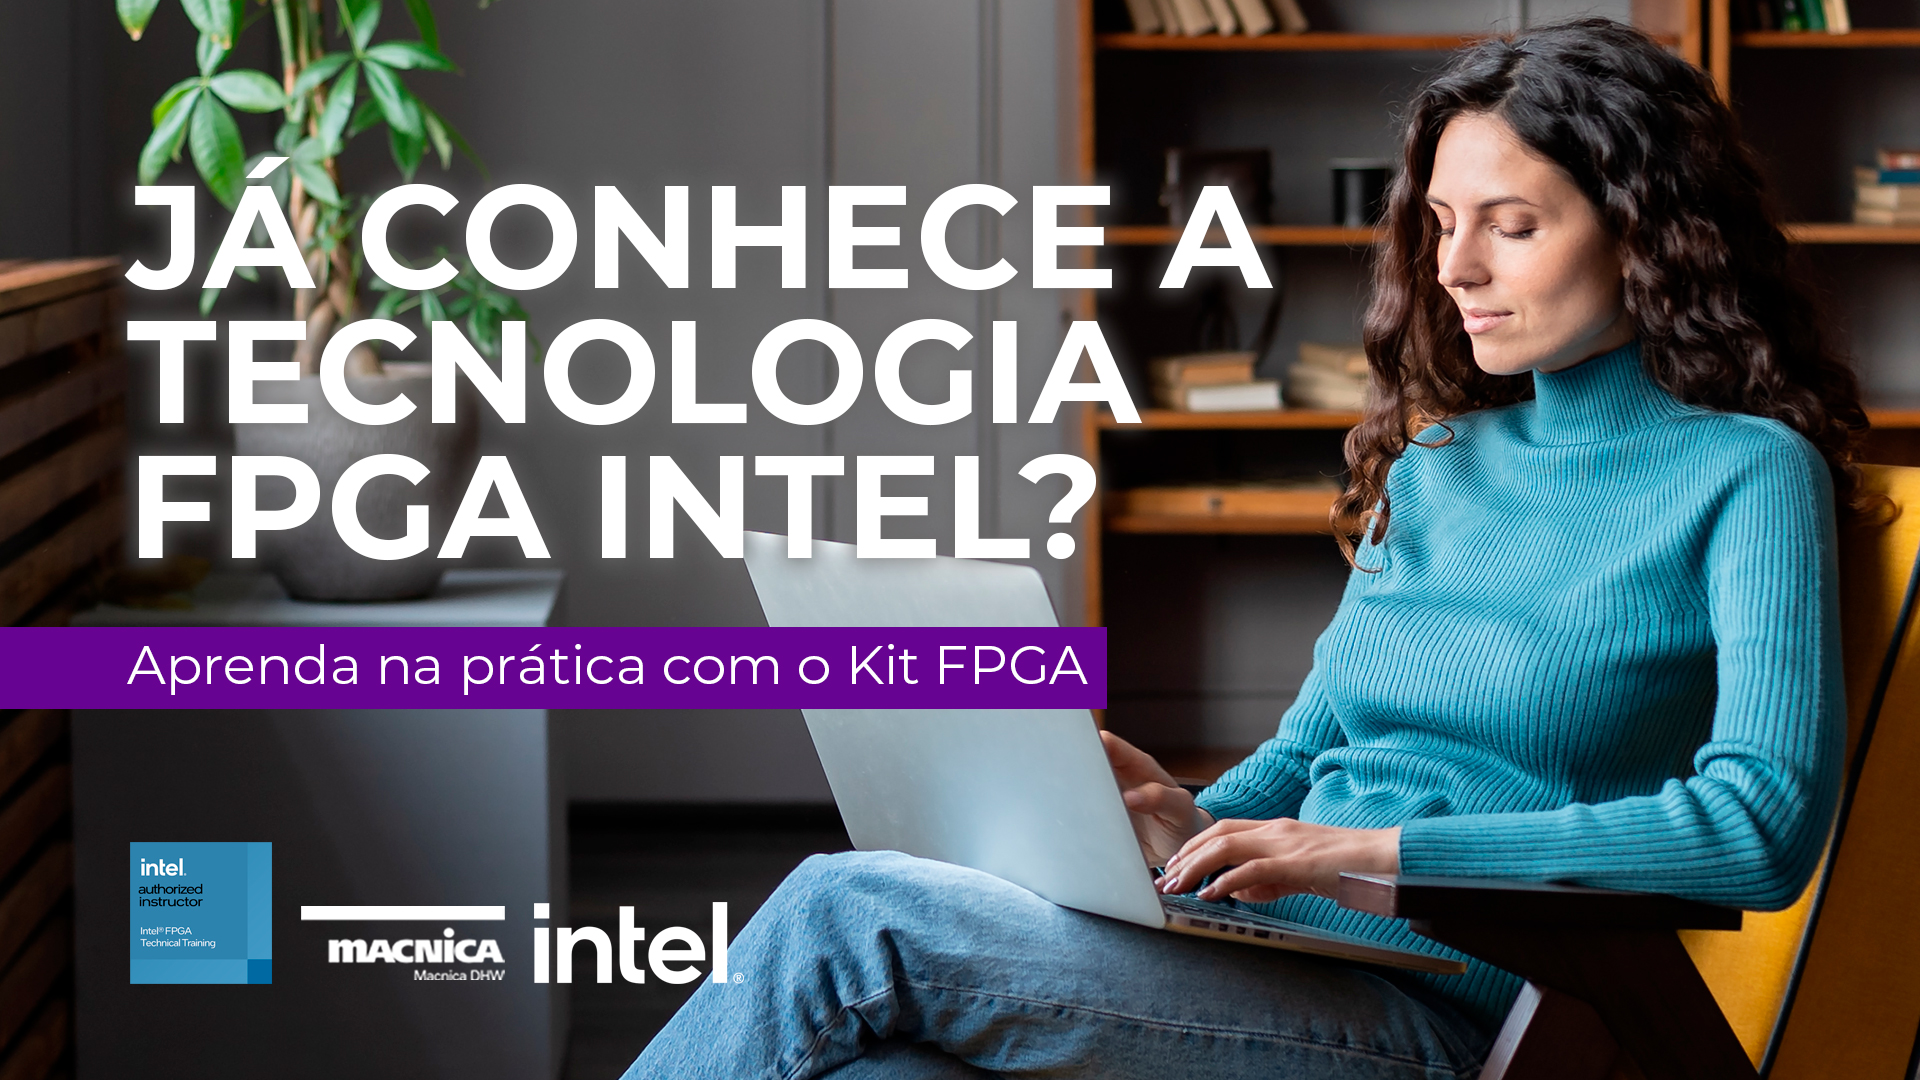 You are currently viewing Tecnologia FPGA Intel aprenda na prática com kit FPGA